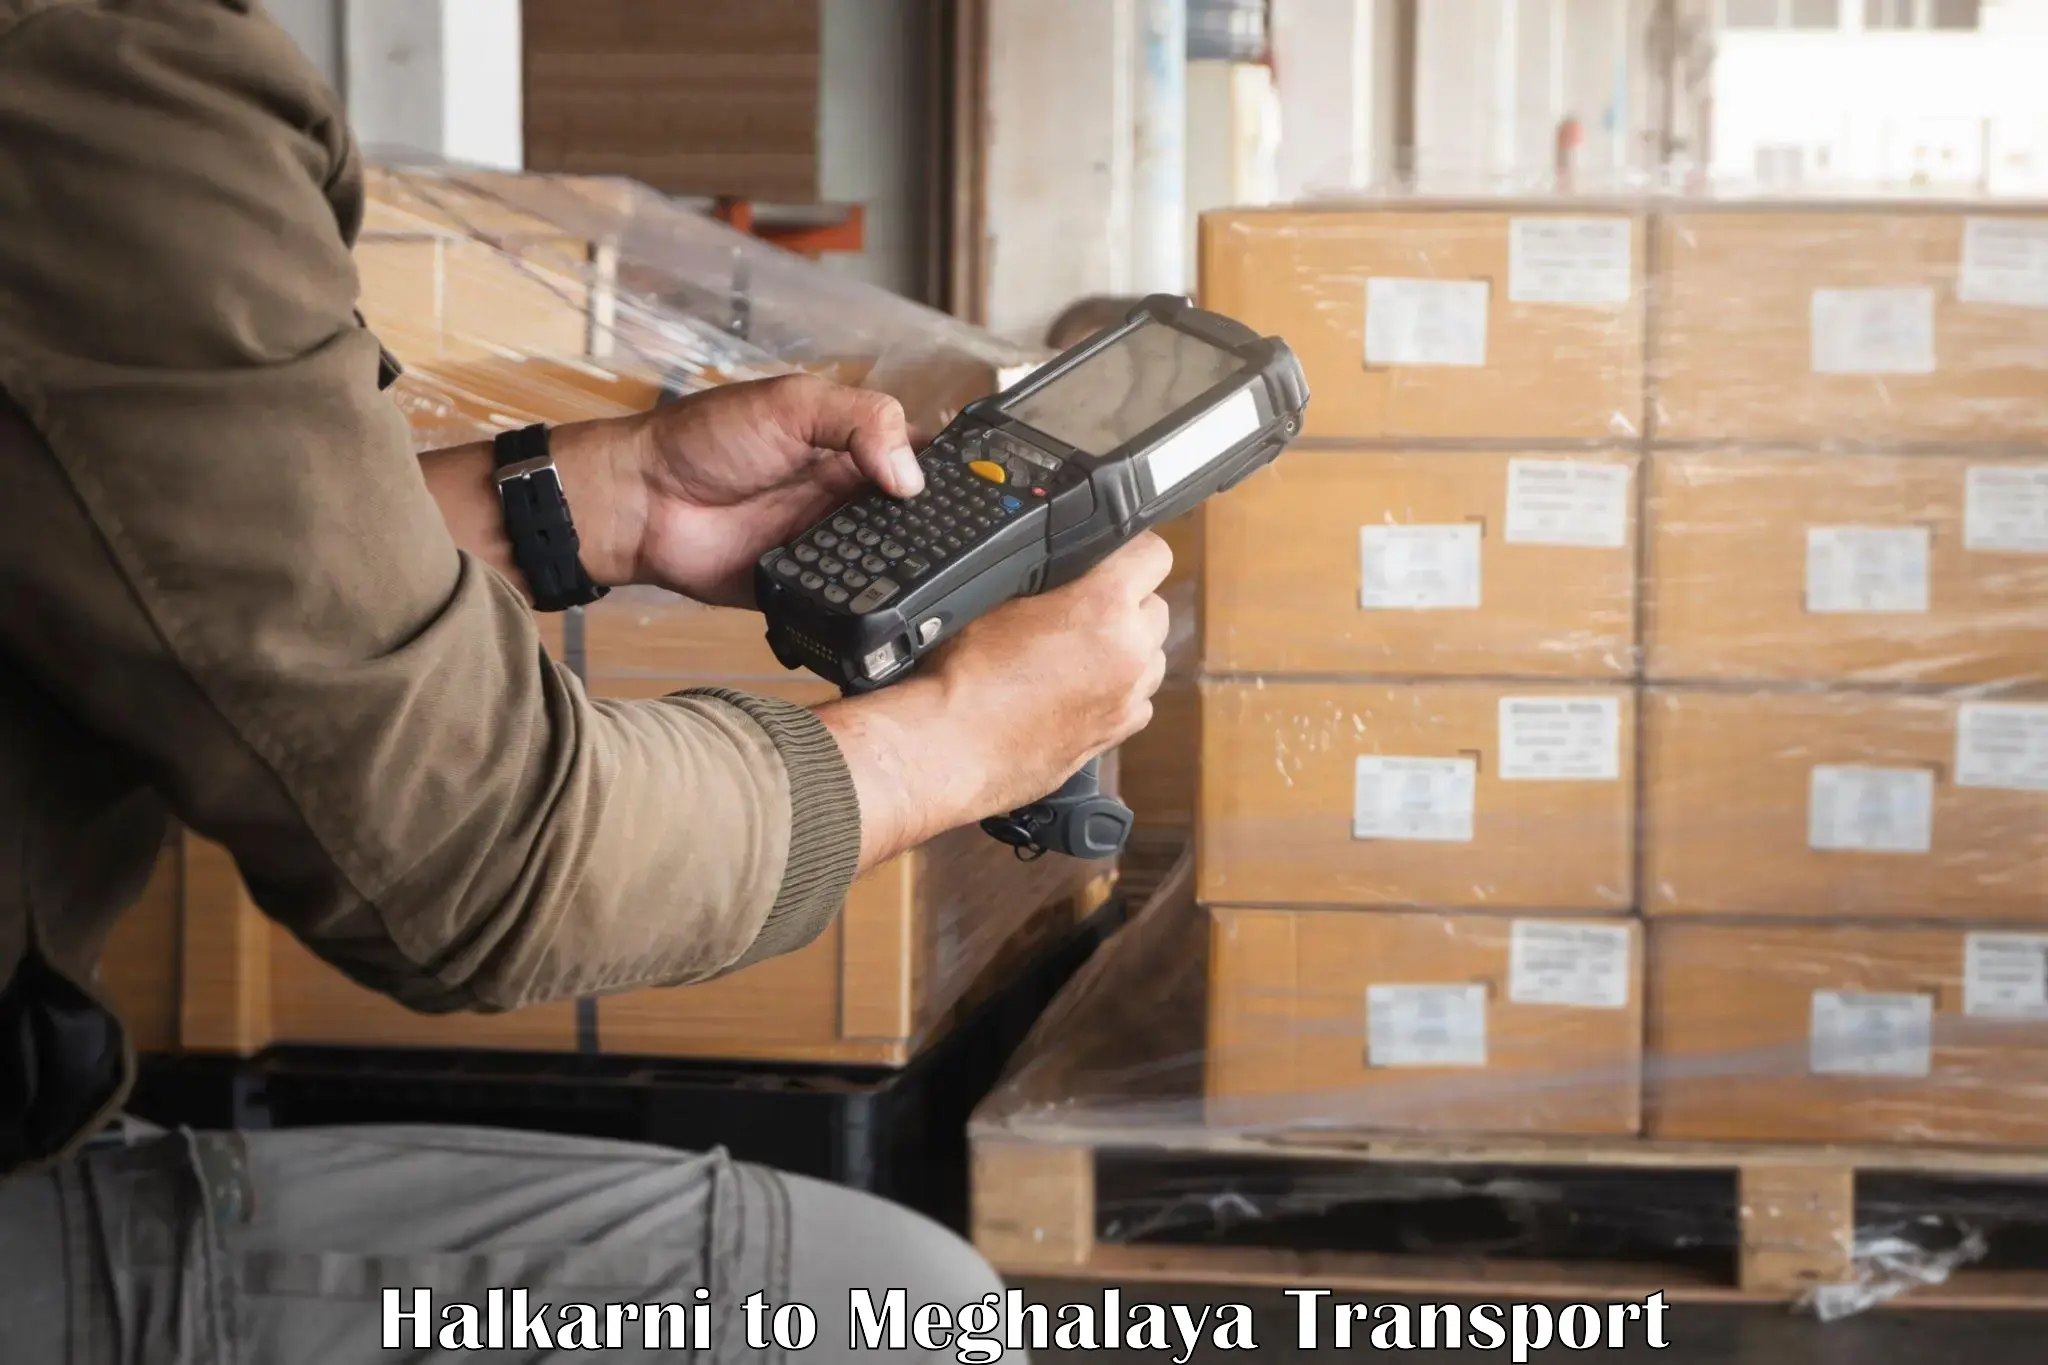 Truck transport companies in India Halkarni to Shillong